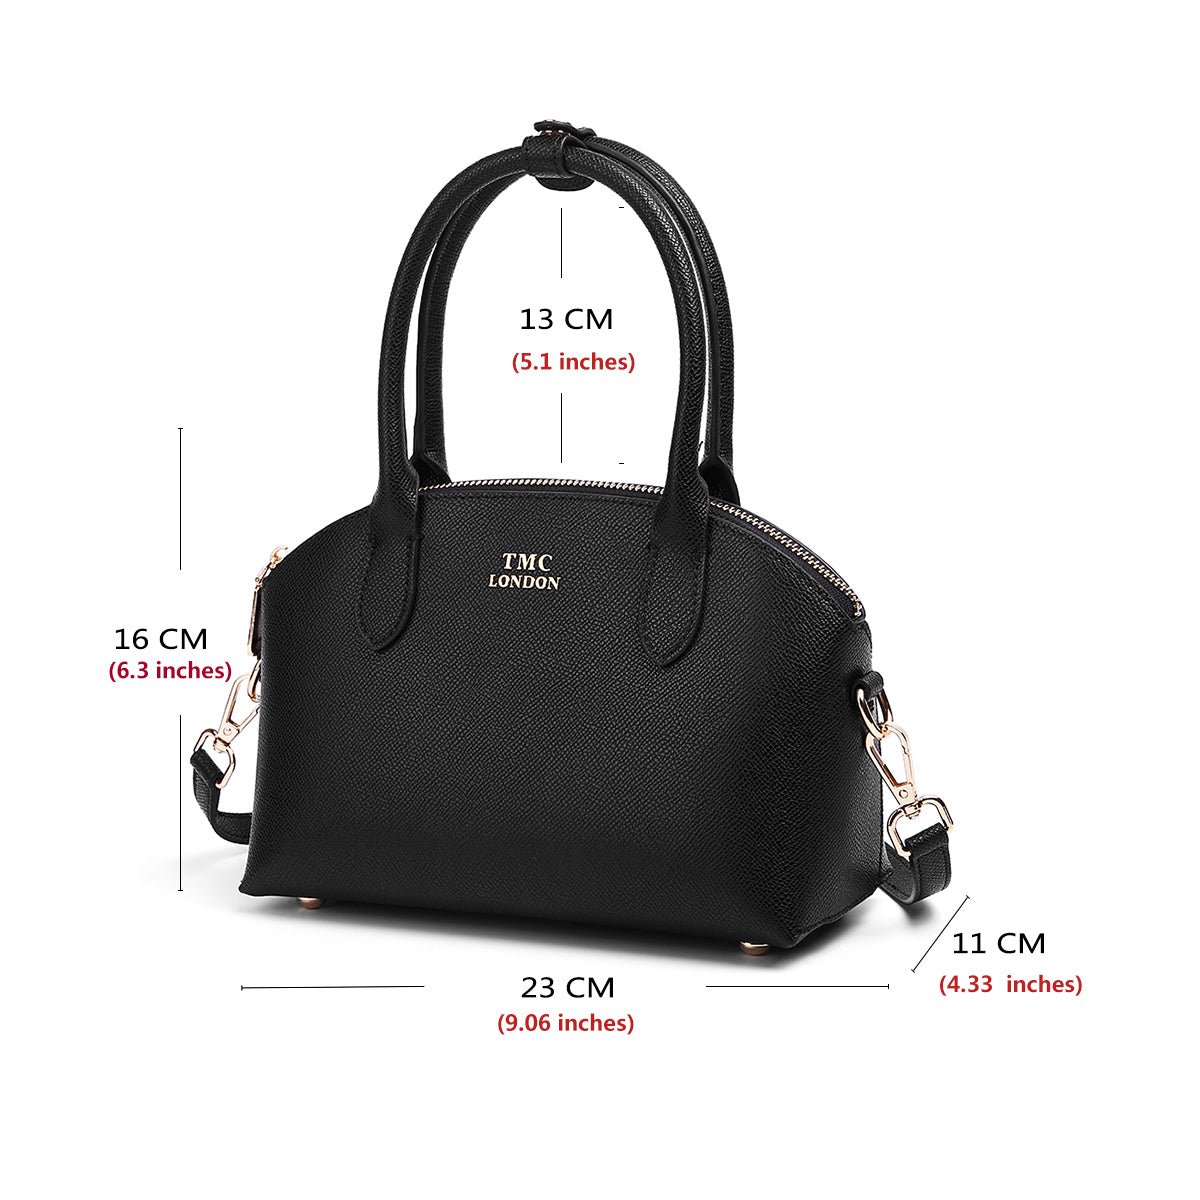 Black small shoulder handbag